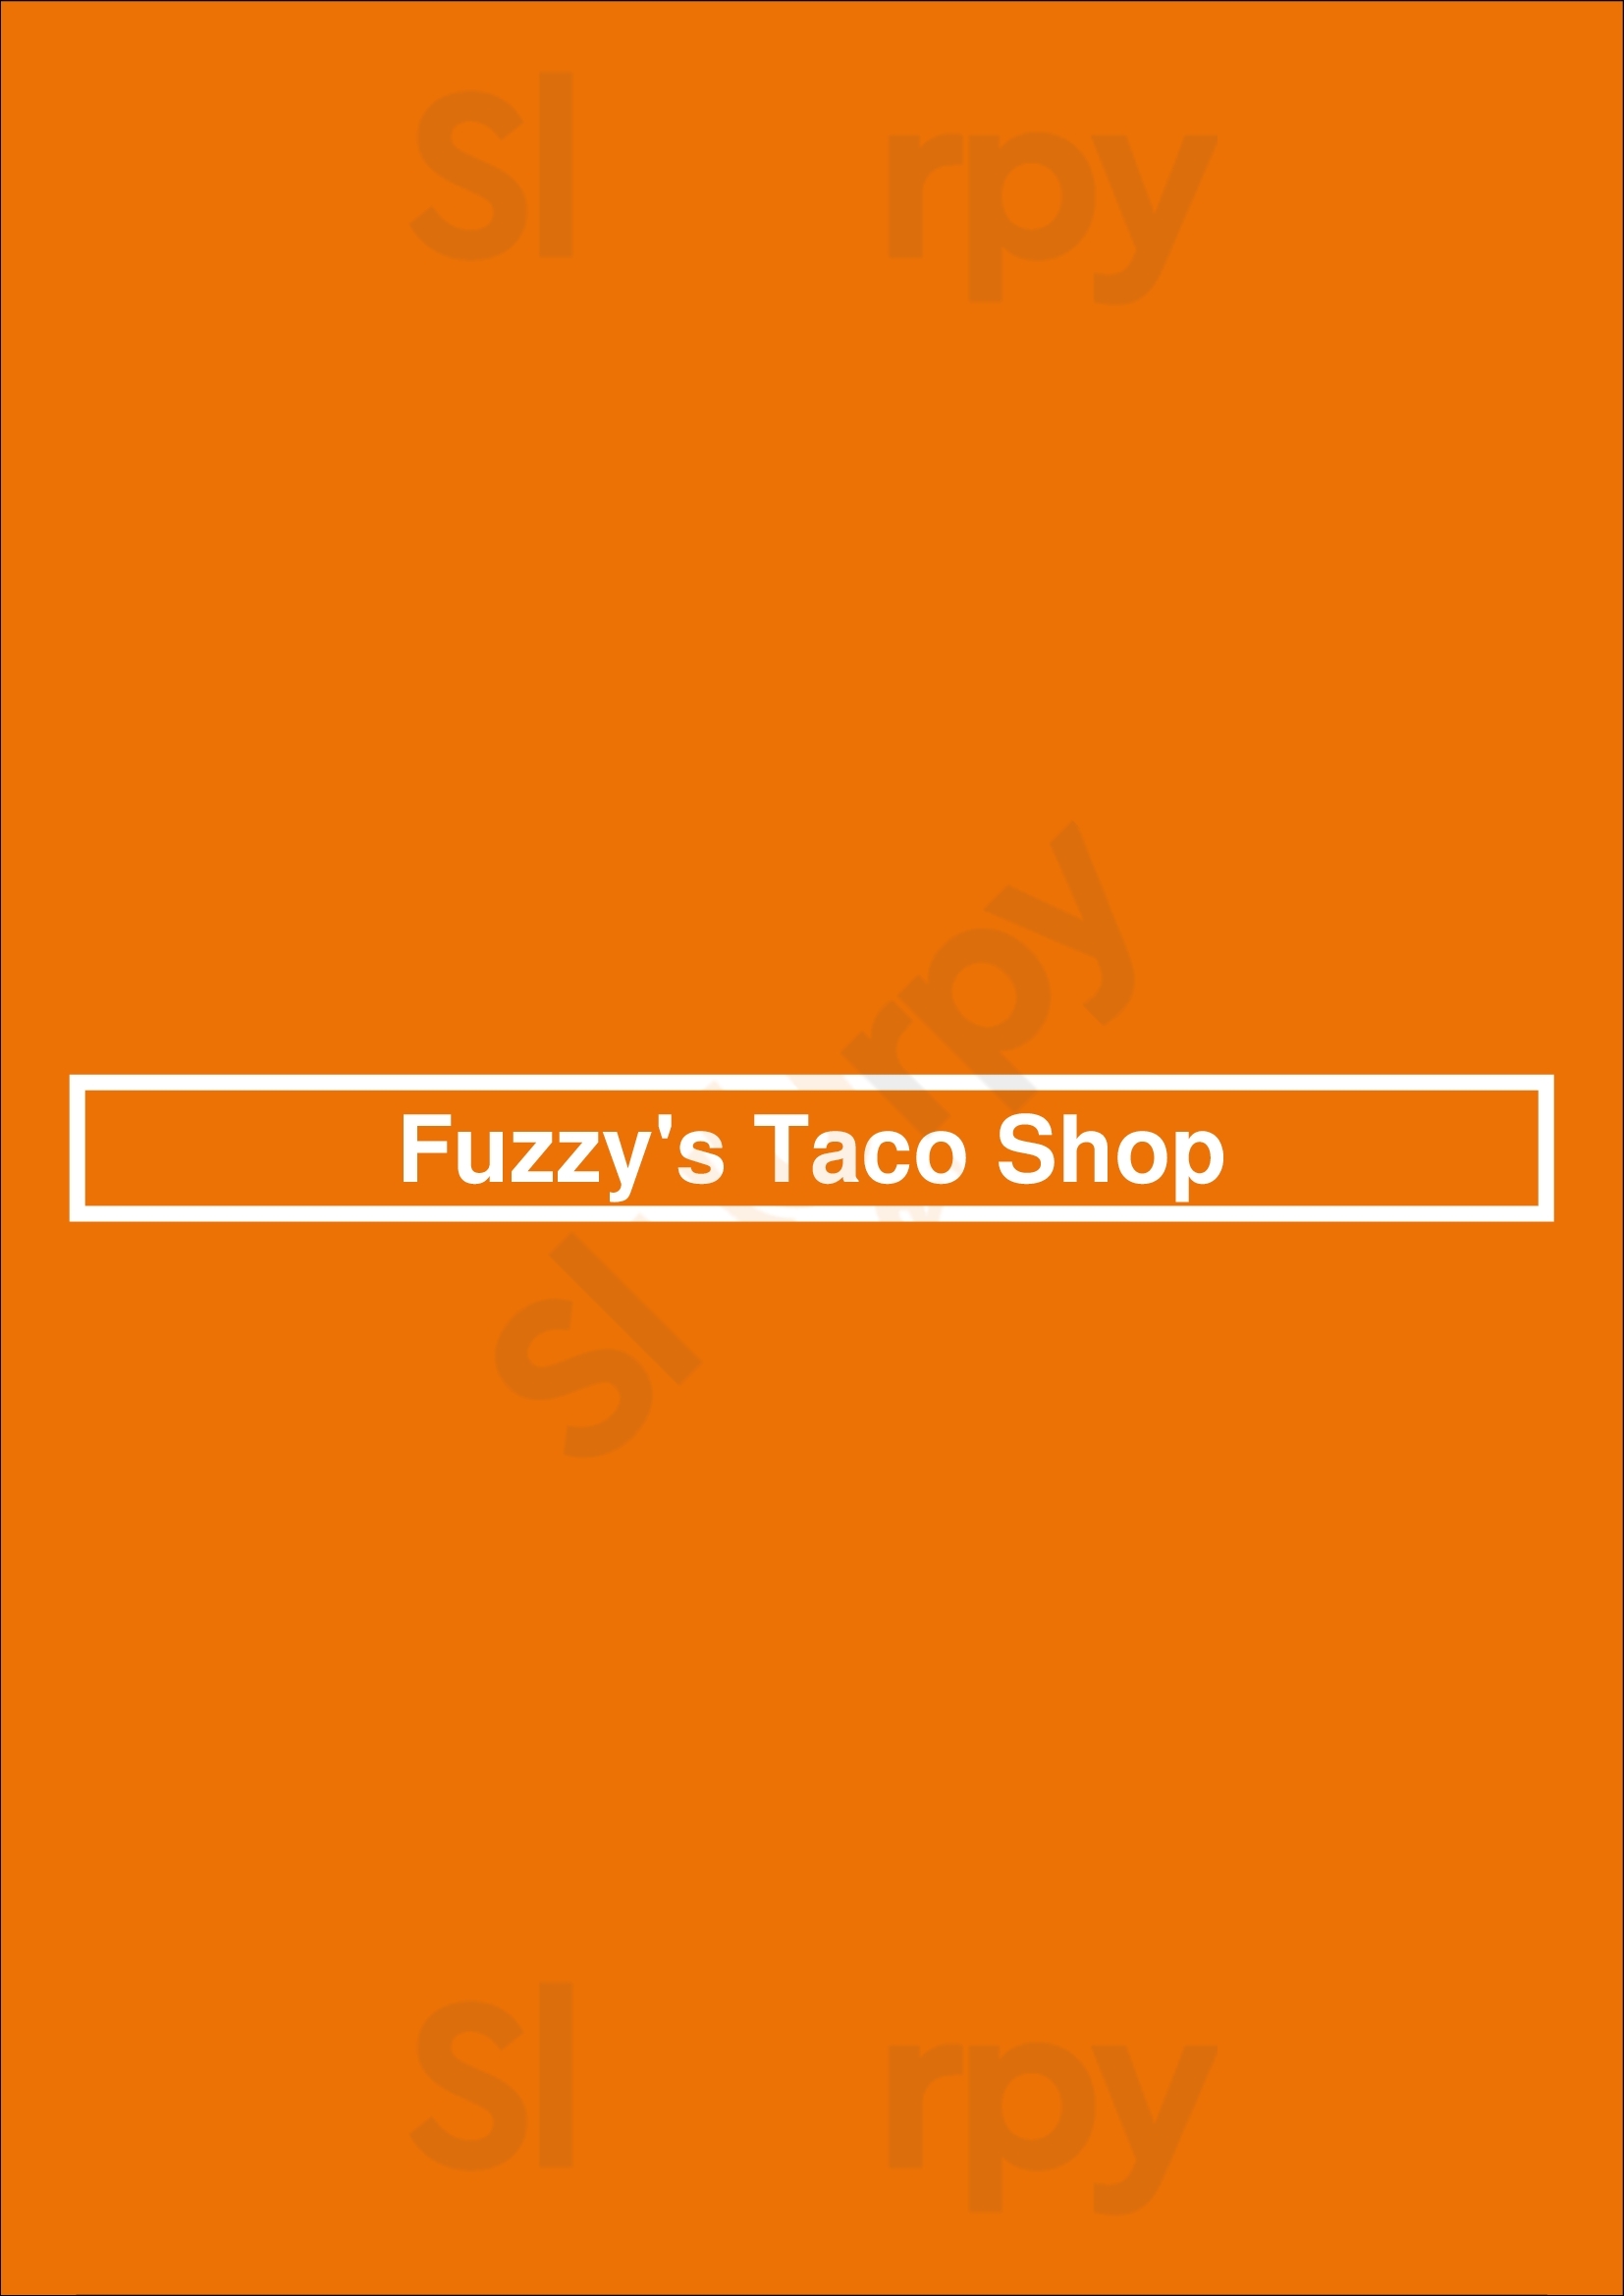 Fuzzy's Taco Shop Houston Menu - 1